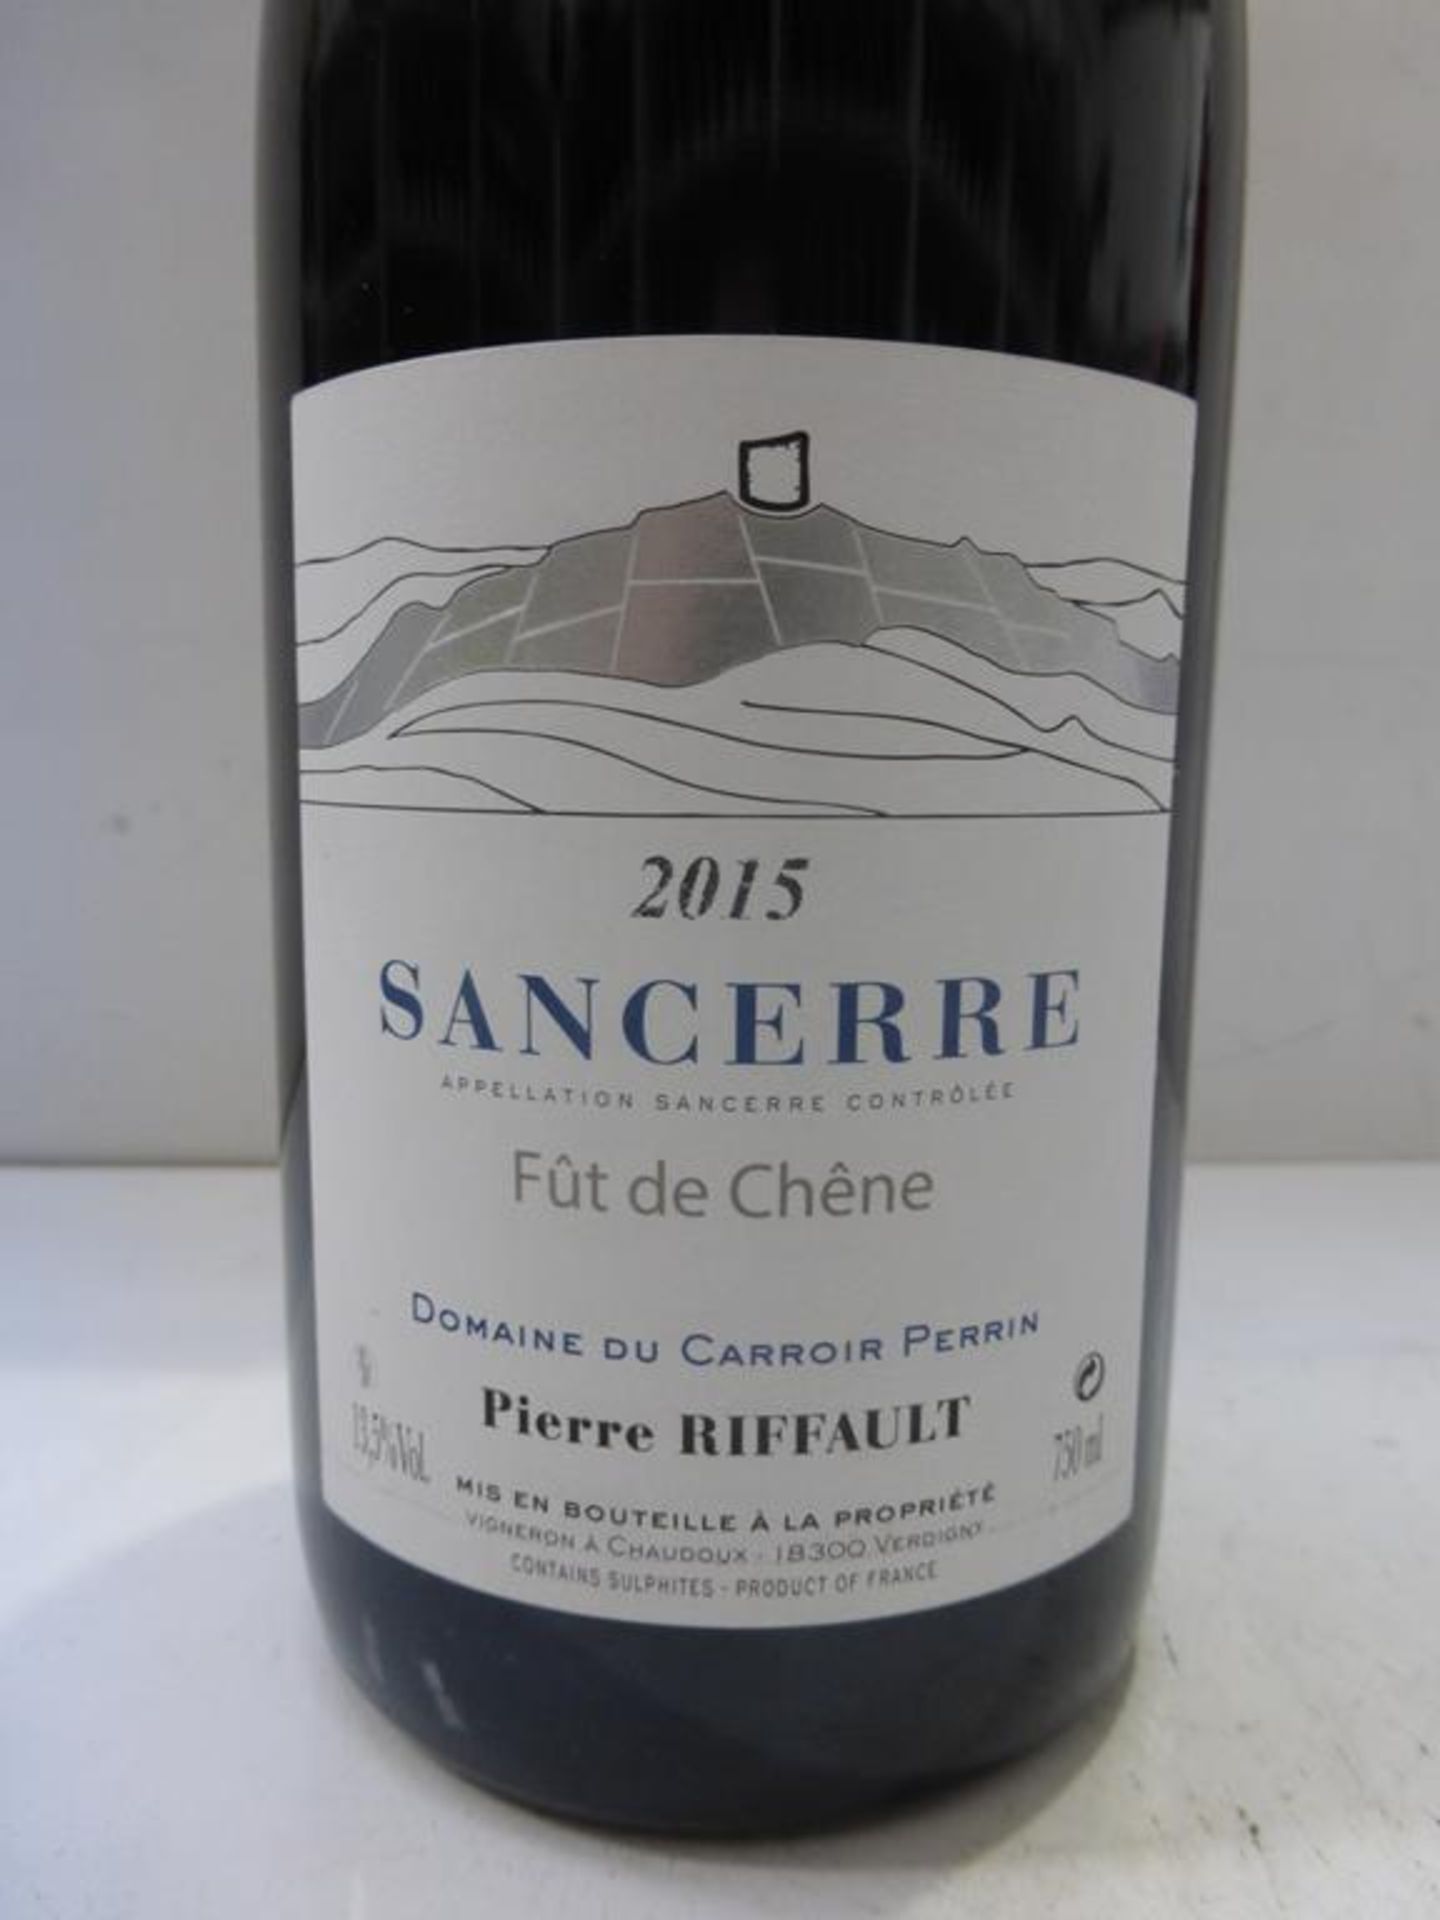 12 X Bottles of Domaine Du Carroir Perrin Sancerre Fut De Chene Red Wine 2015 - Image 2 of 2